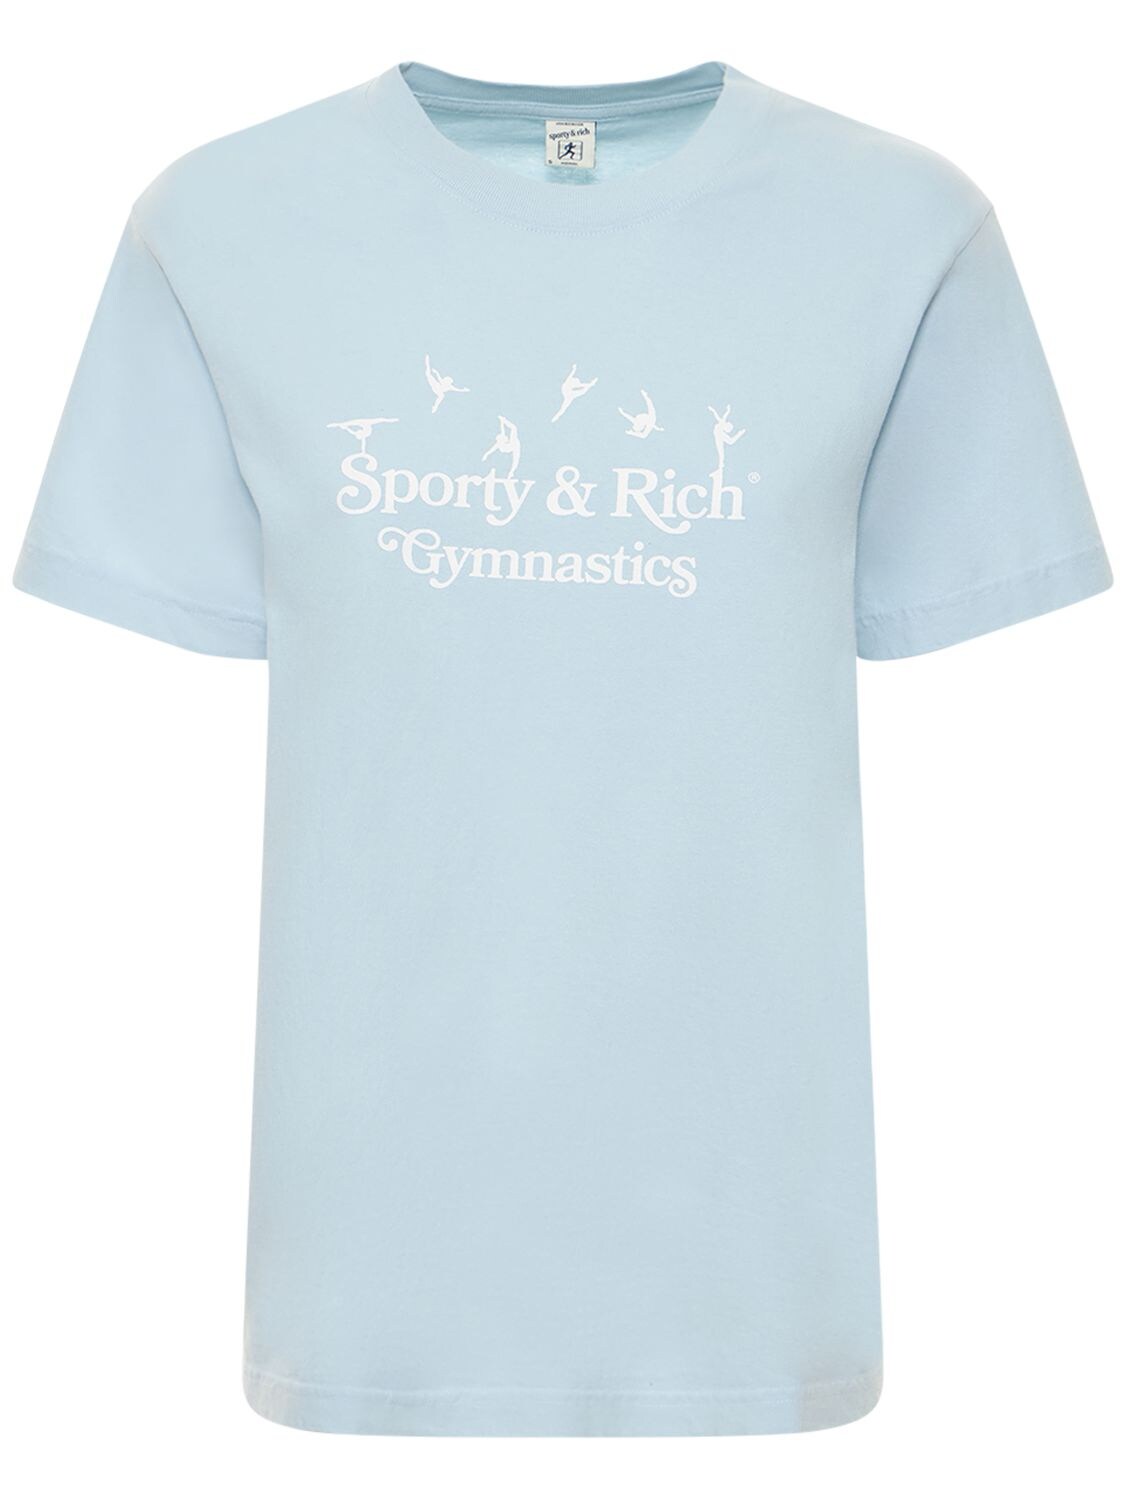 Sr Gymnastics T-shirt